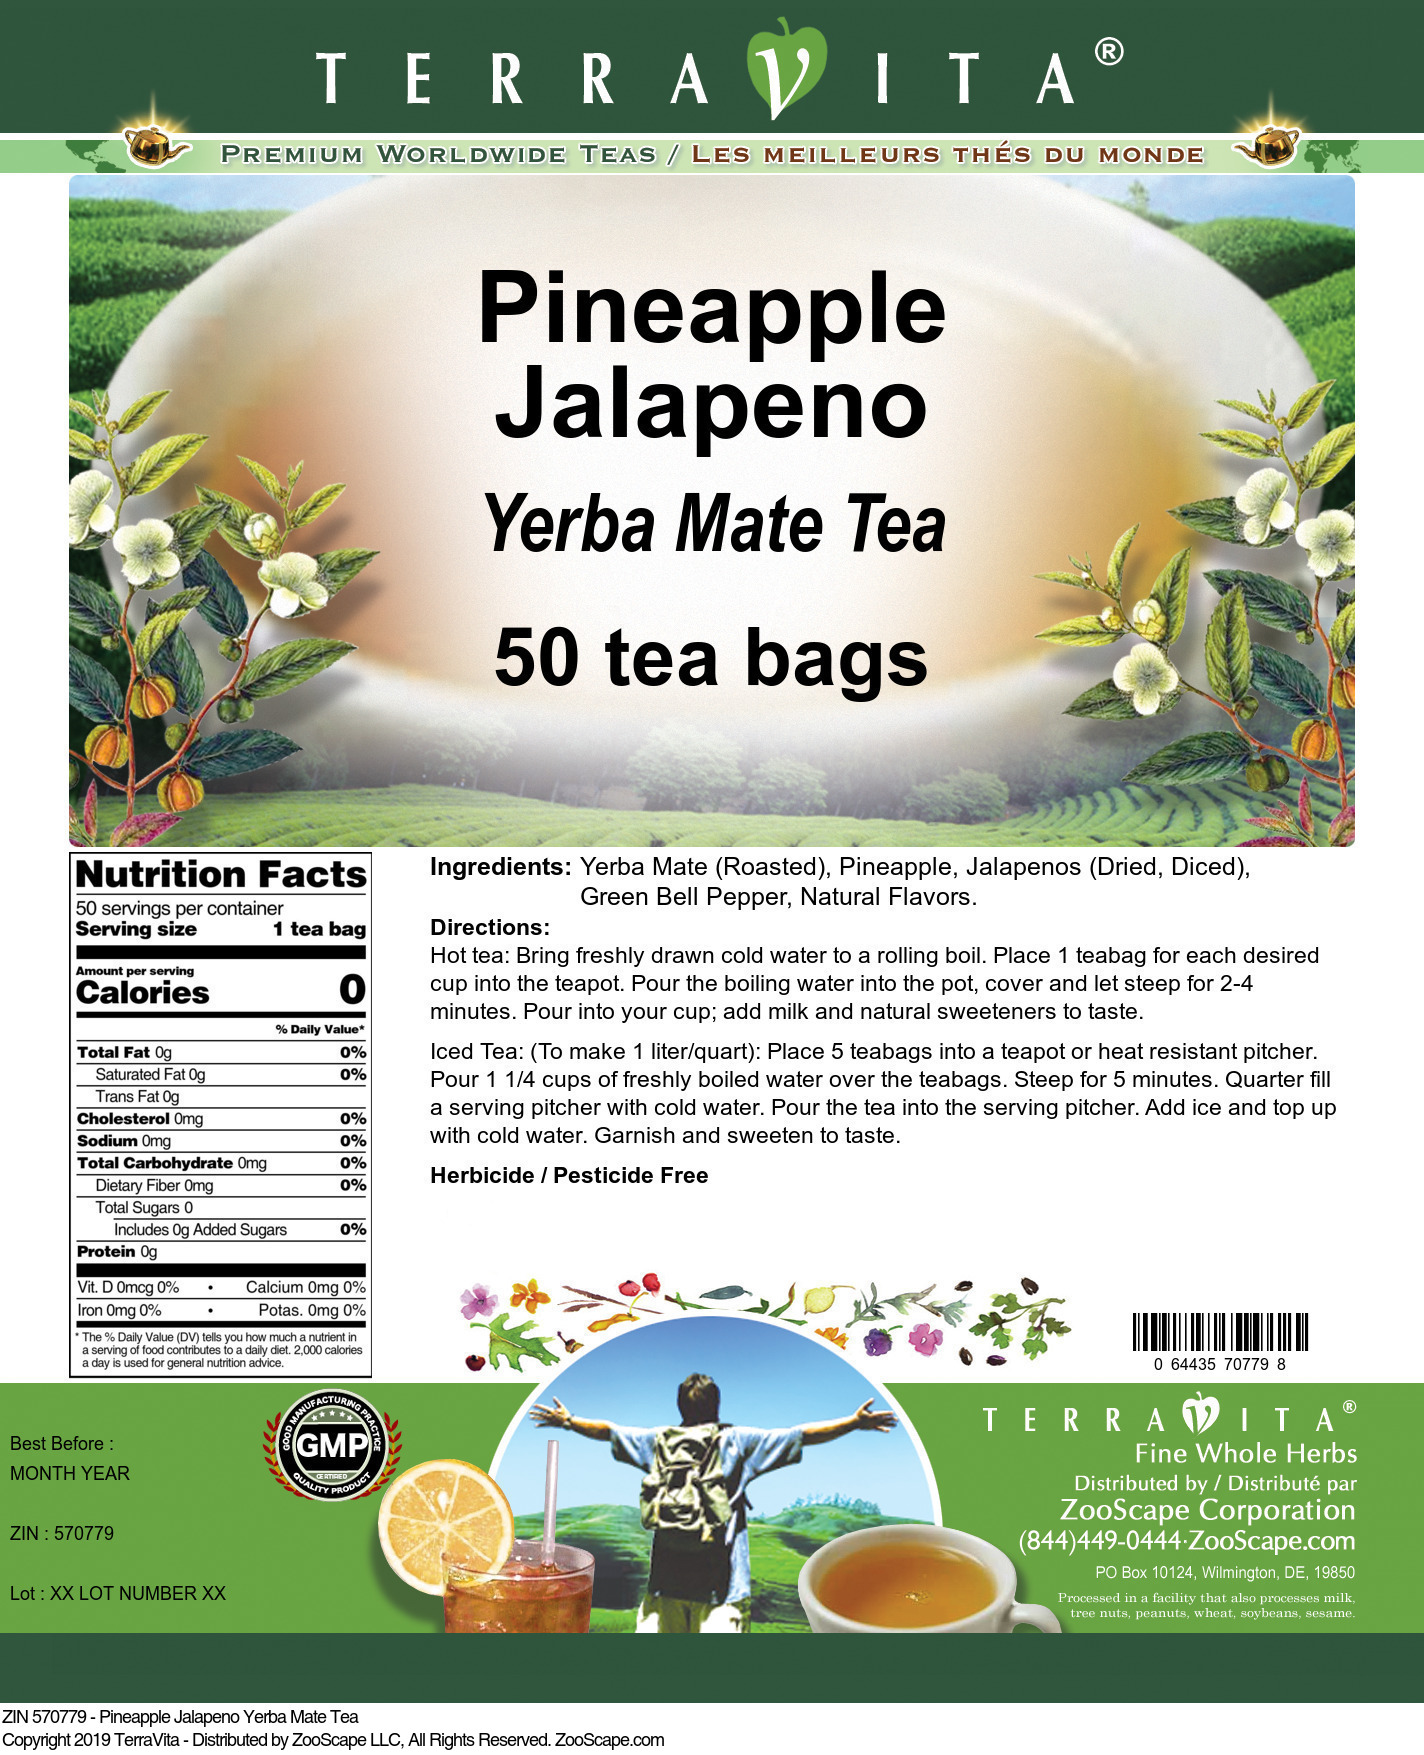 Pineapple Jalapeno Yerba Mate Tea - Label